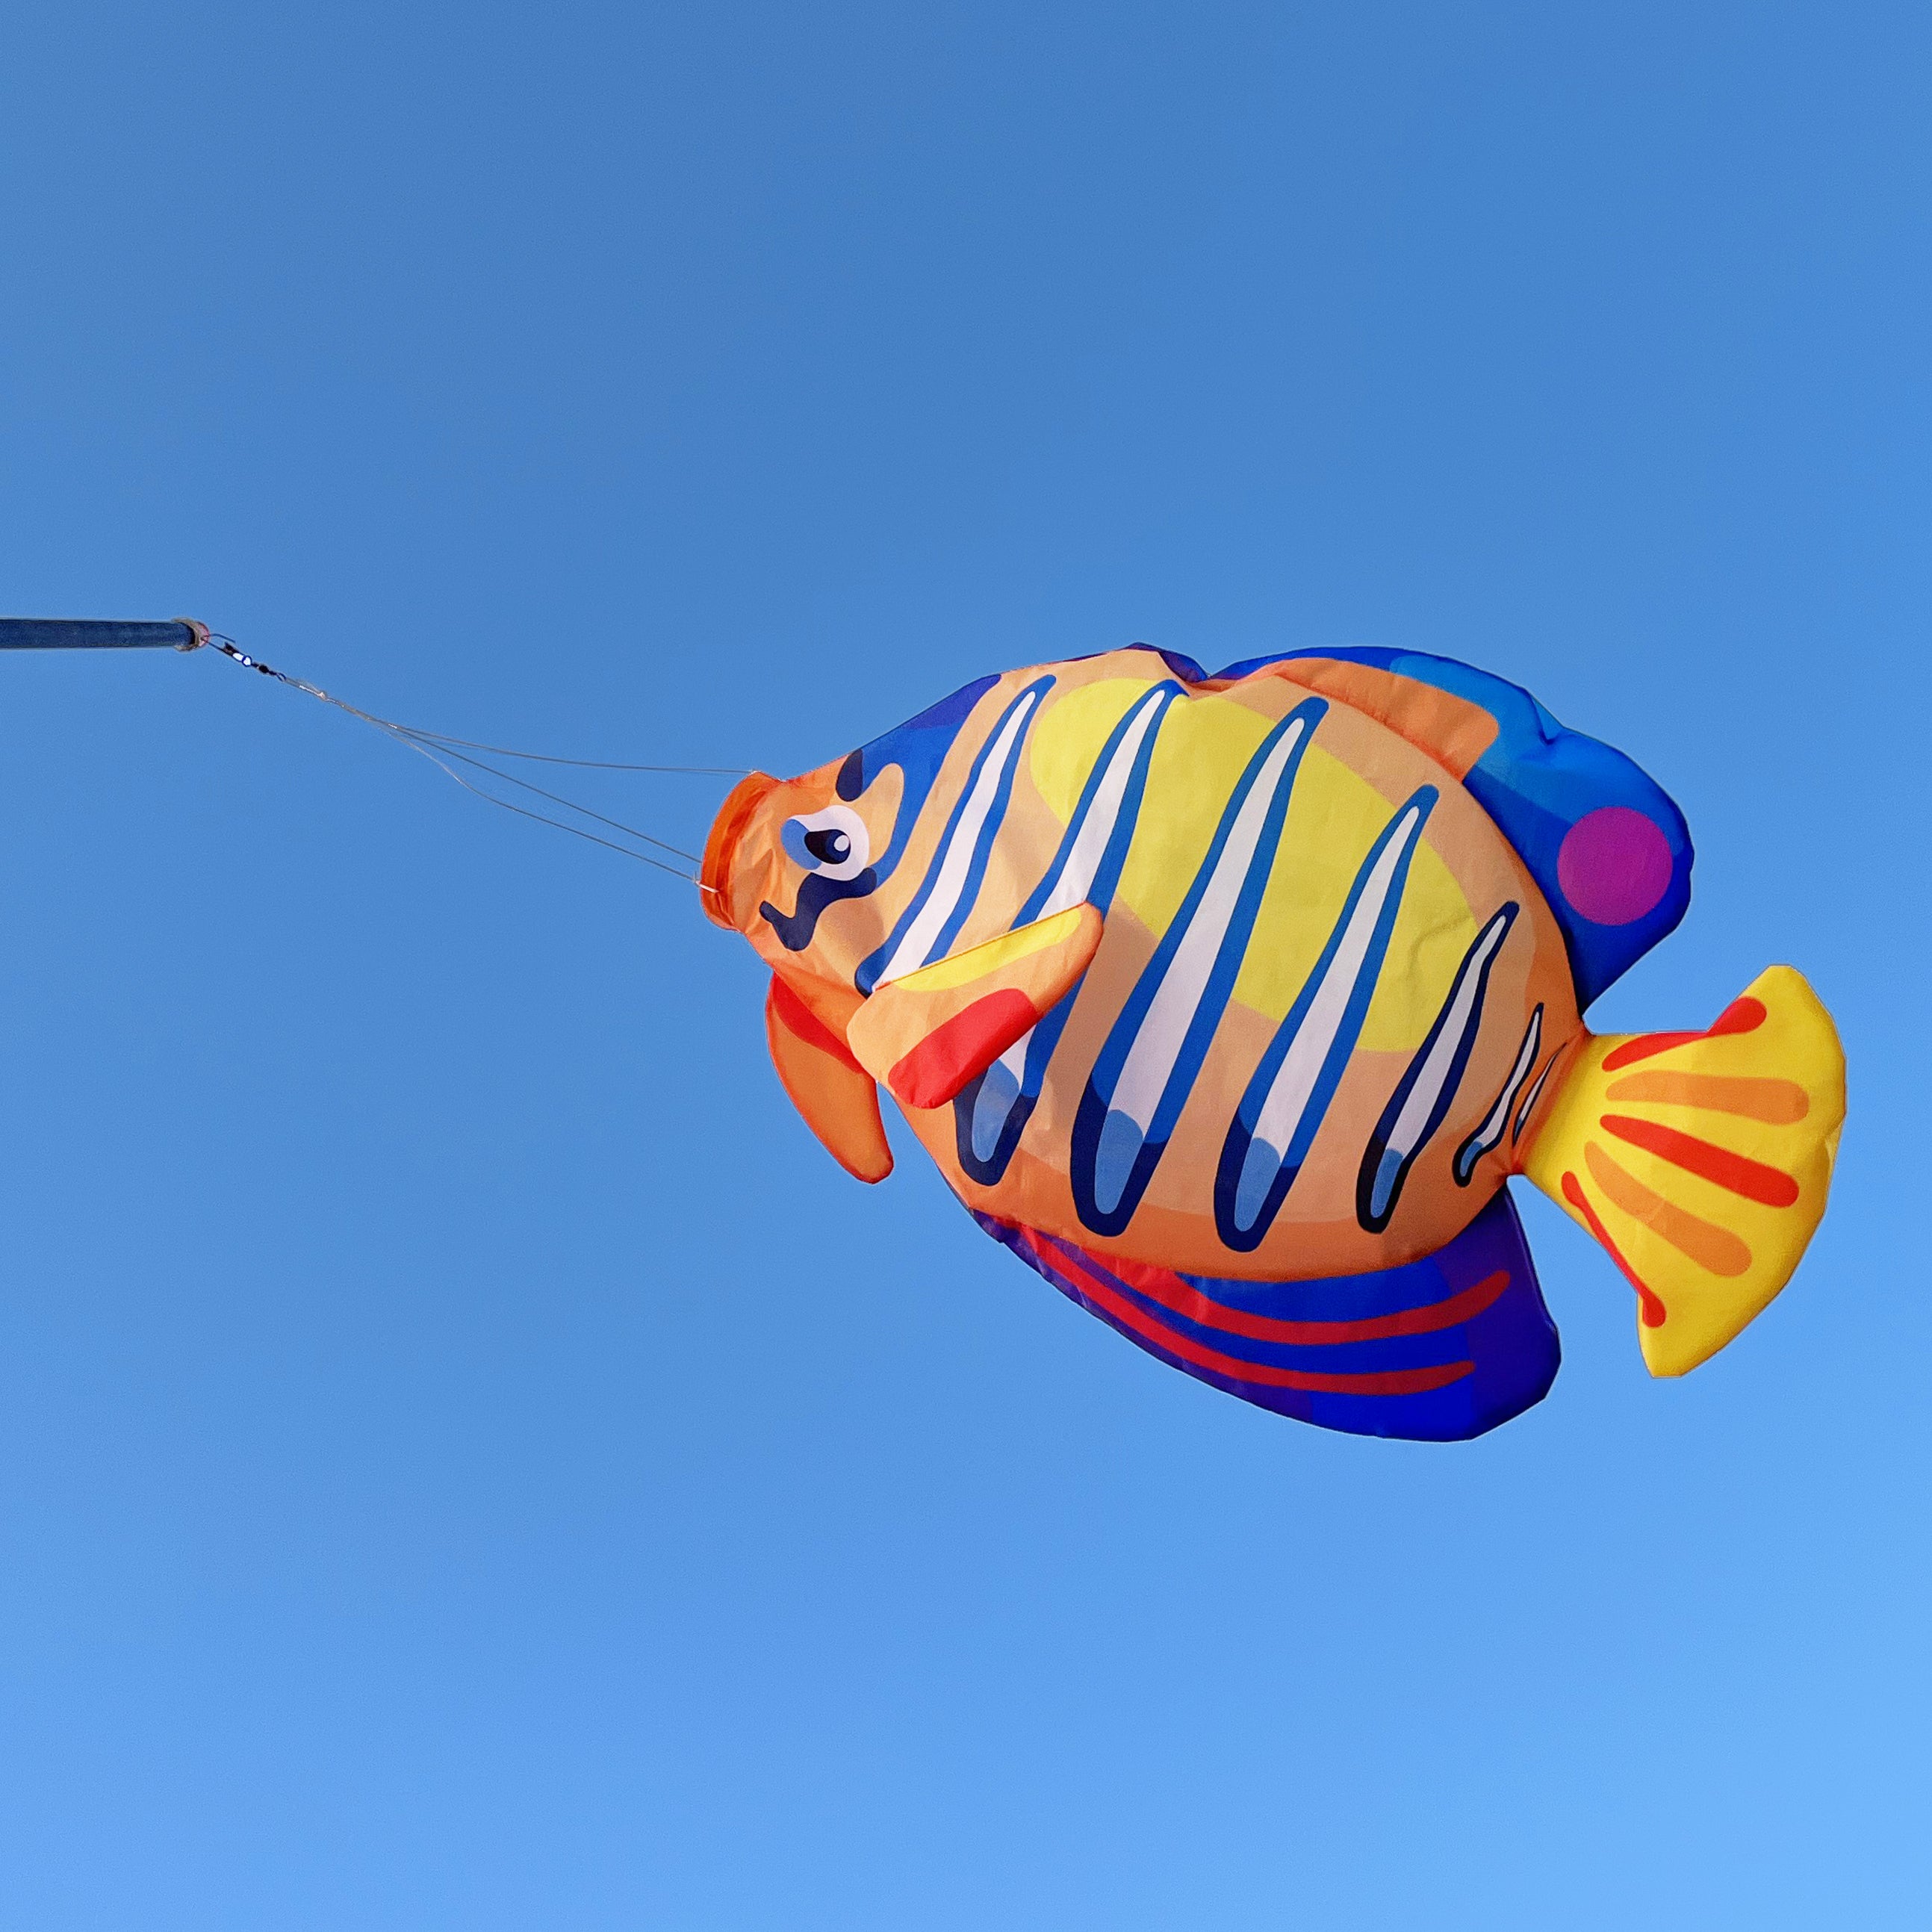 30 inch Royal Angelfish Windsock – Emmakites